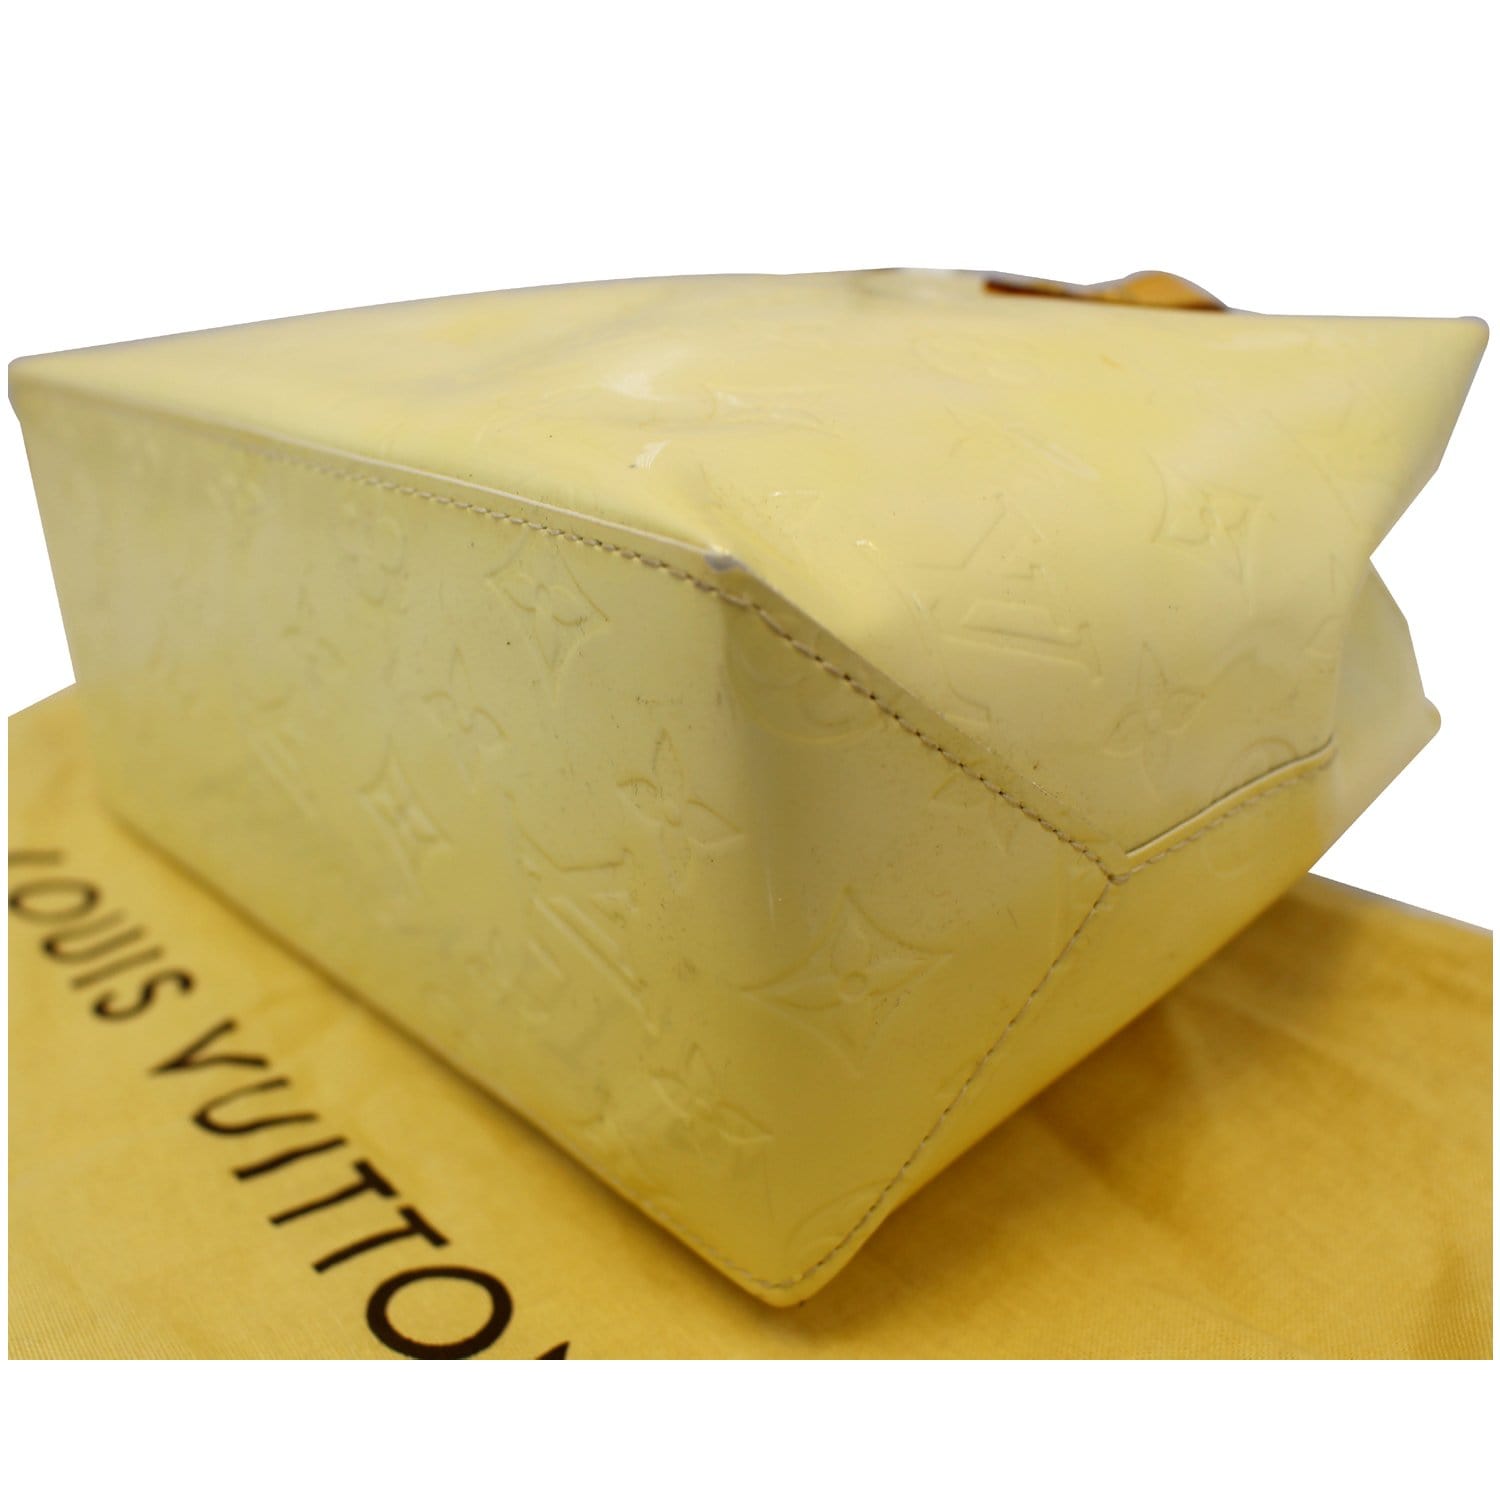 Louis Vuitton Yellow Monogram Vernis Reade PM Tote Bag 216lvs714